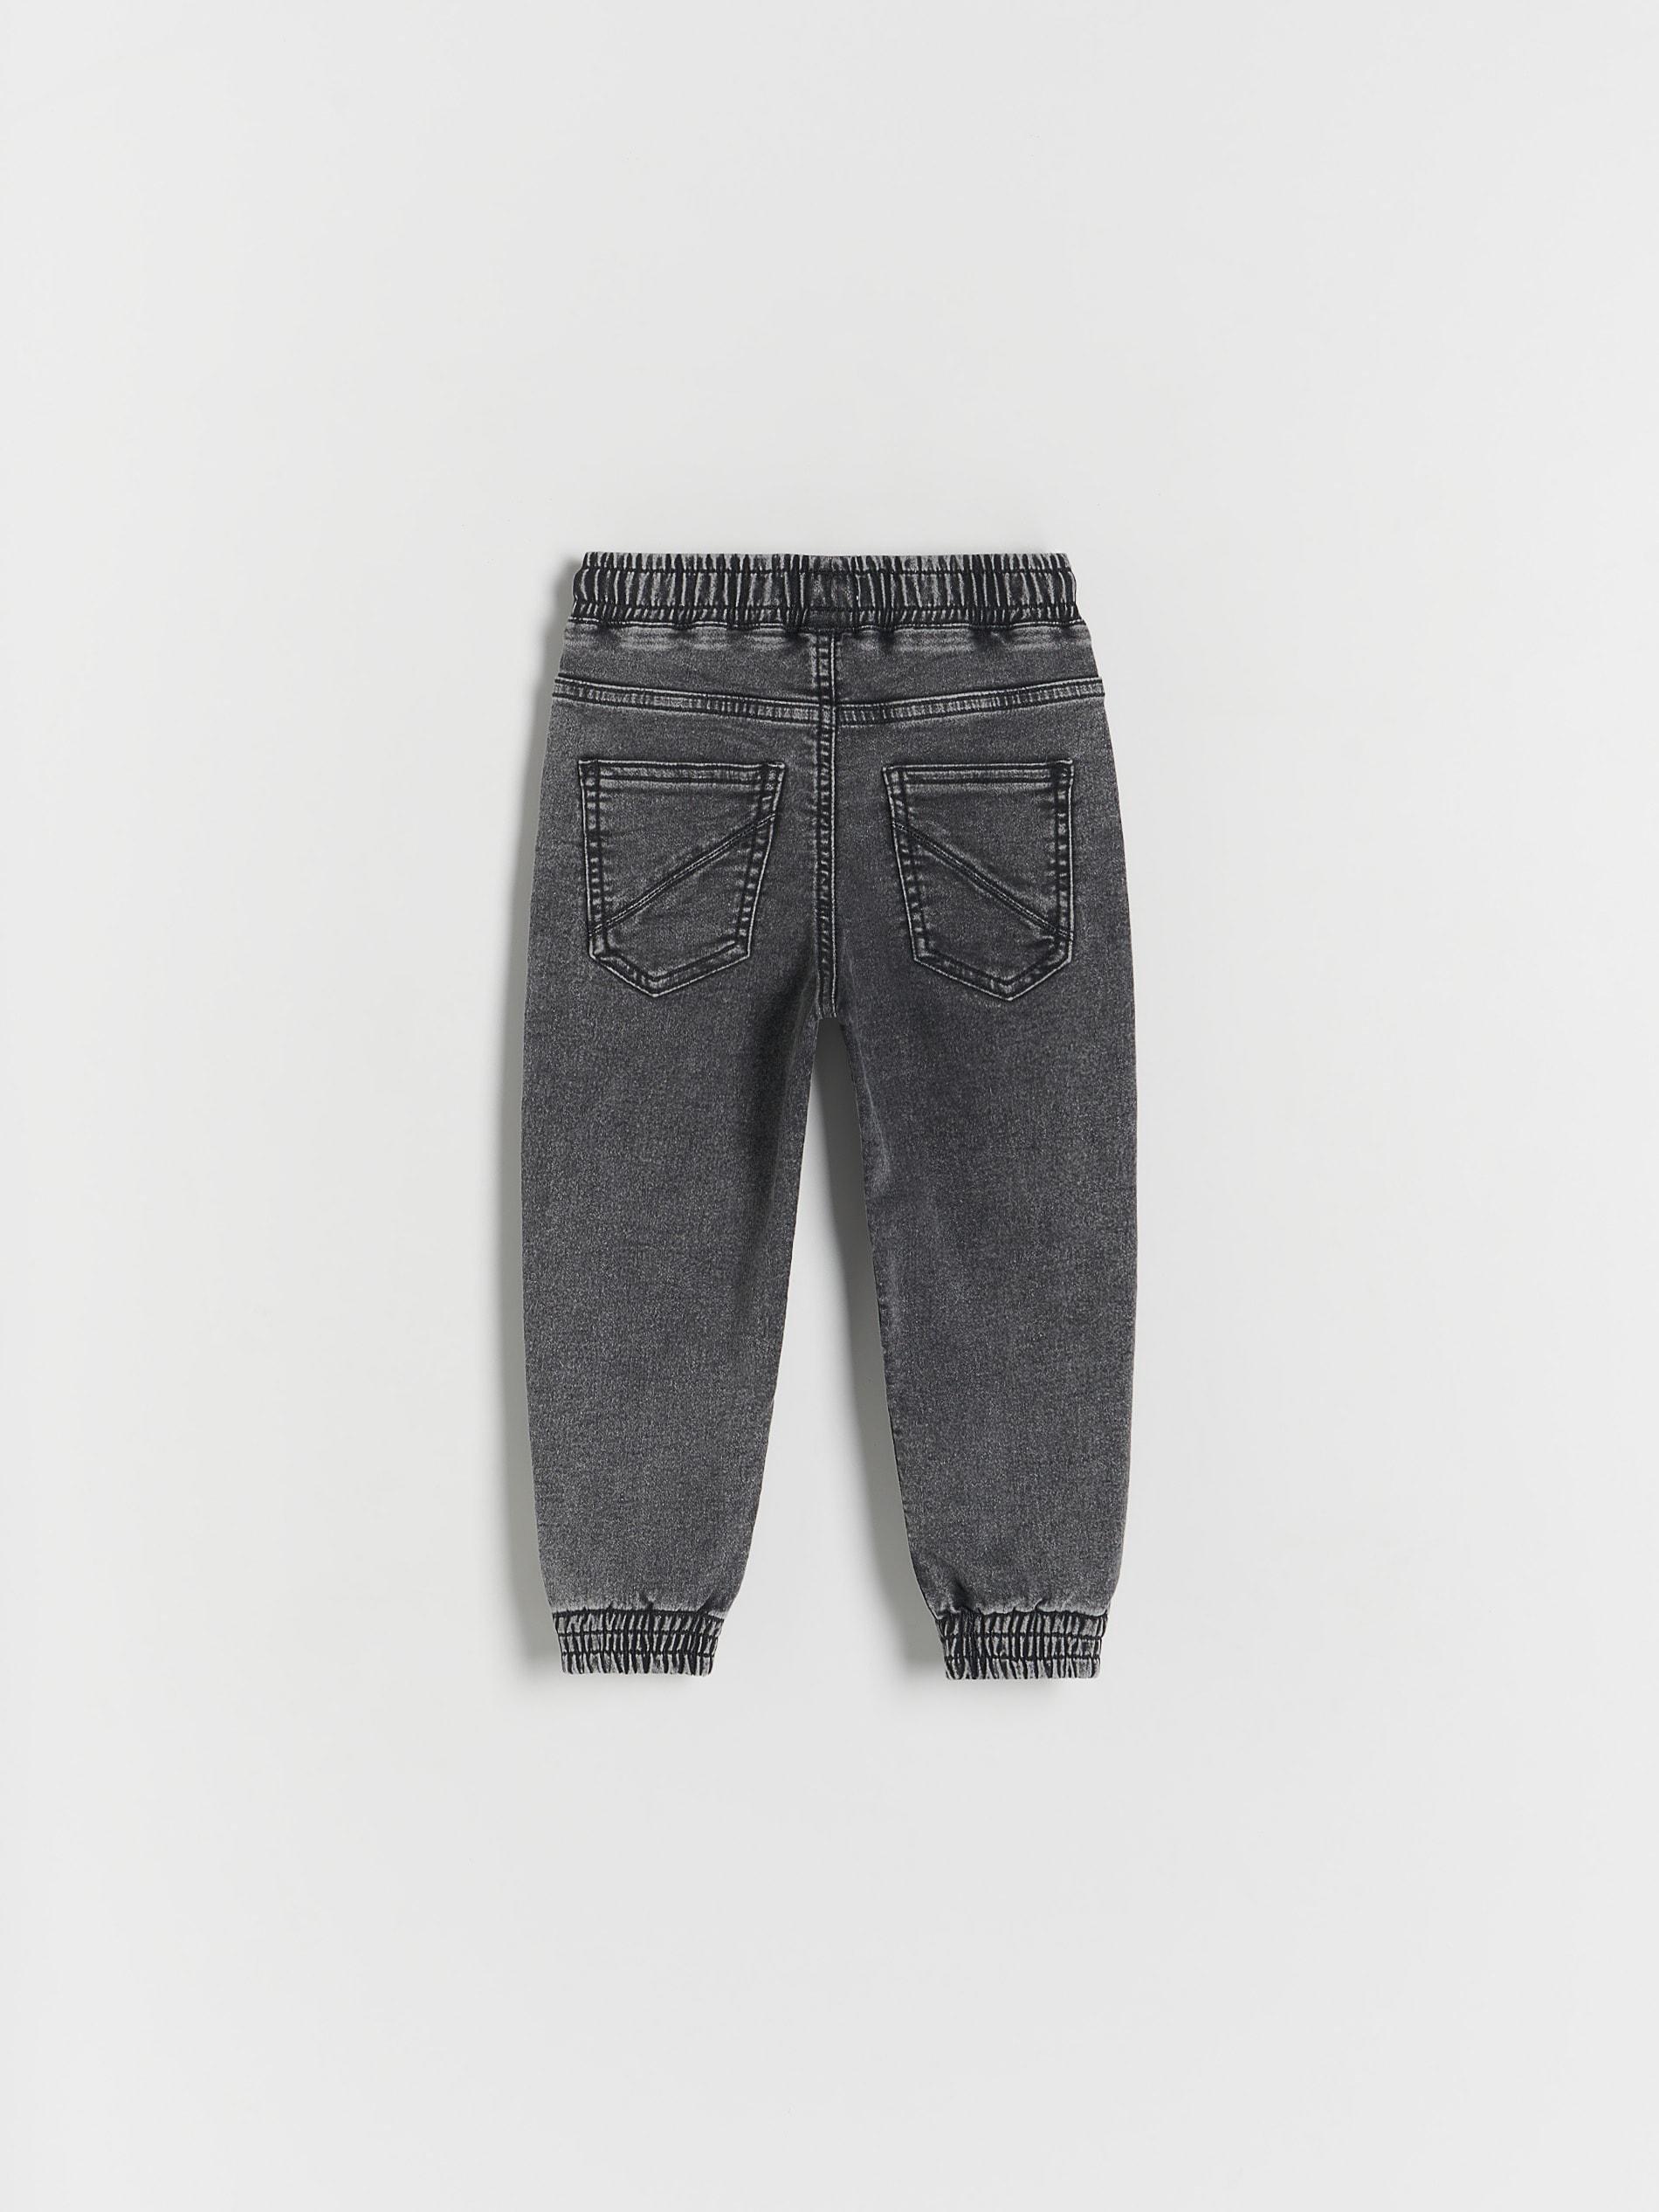 null - Grey Elastic Jeans, Kids Boys